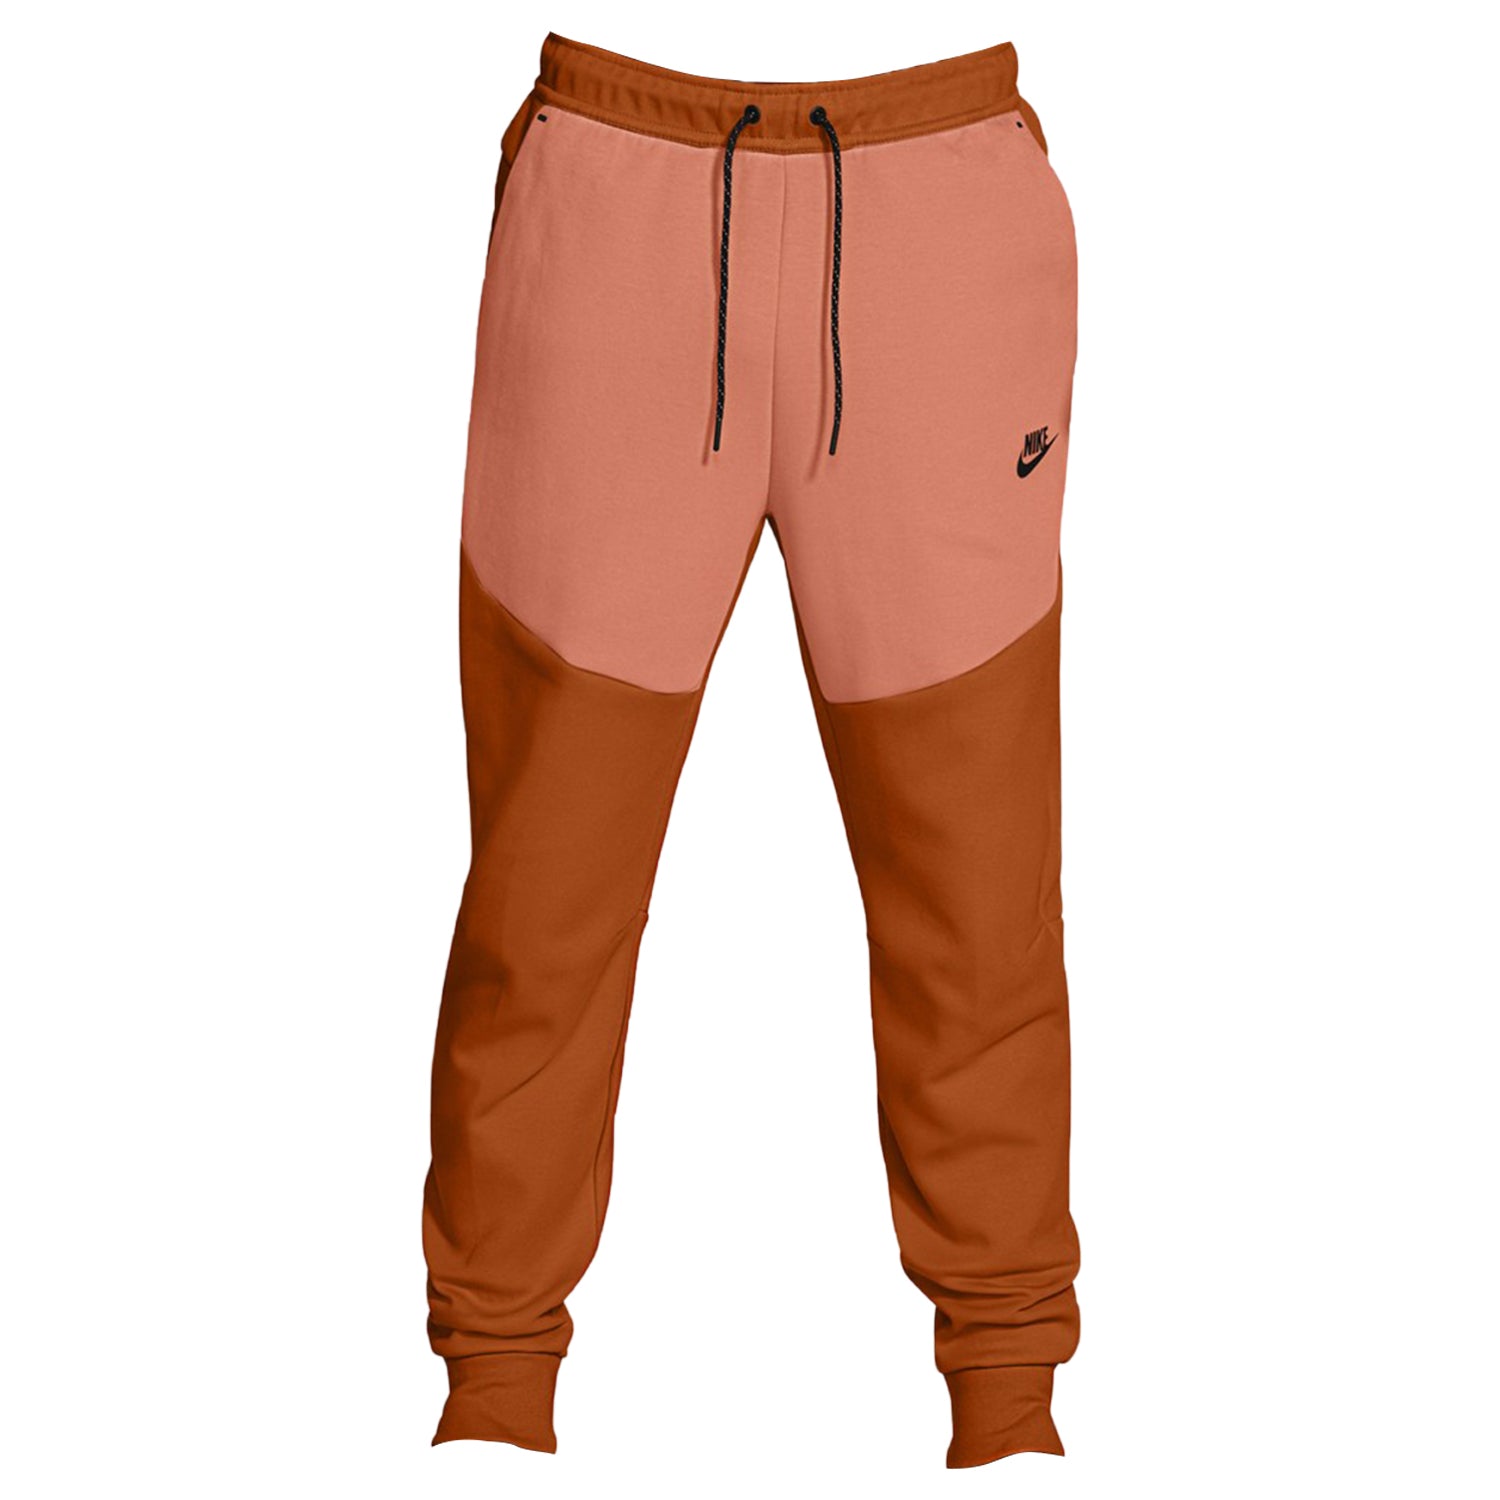 Nike Sportswear Tech Fleece Orange Black - Tent Jogger NY Pants Sale Campfire